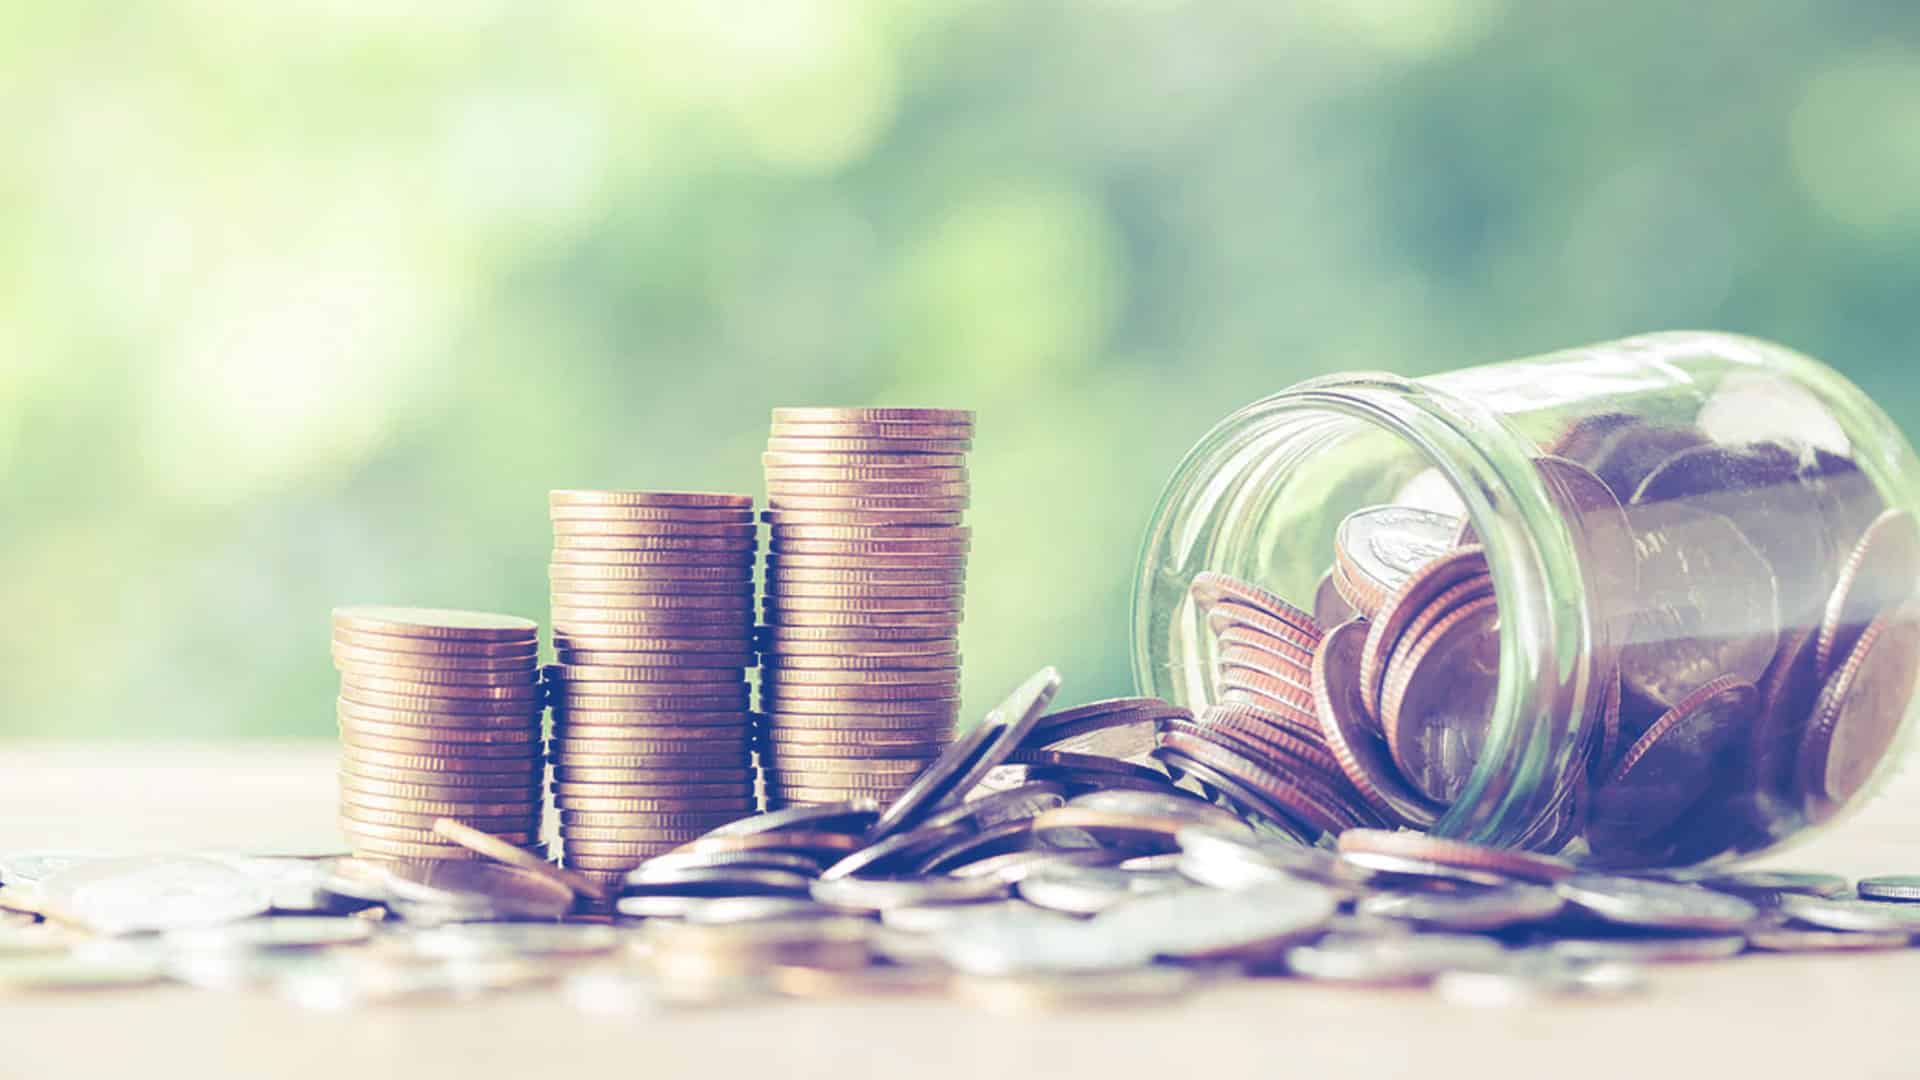 Edelweiss Financial Services Ltd raises Rs 415 cr via NCDs